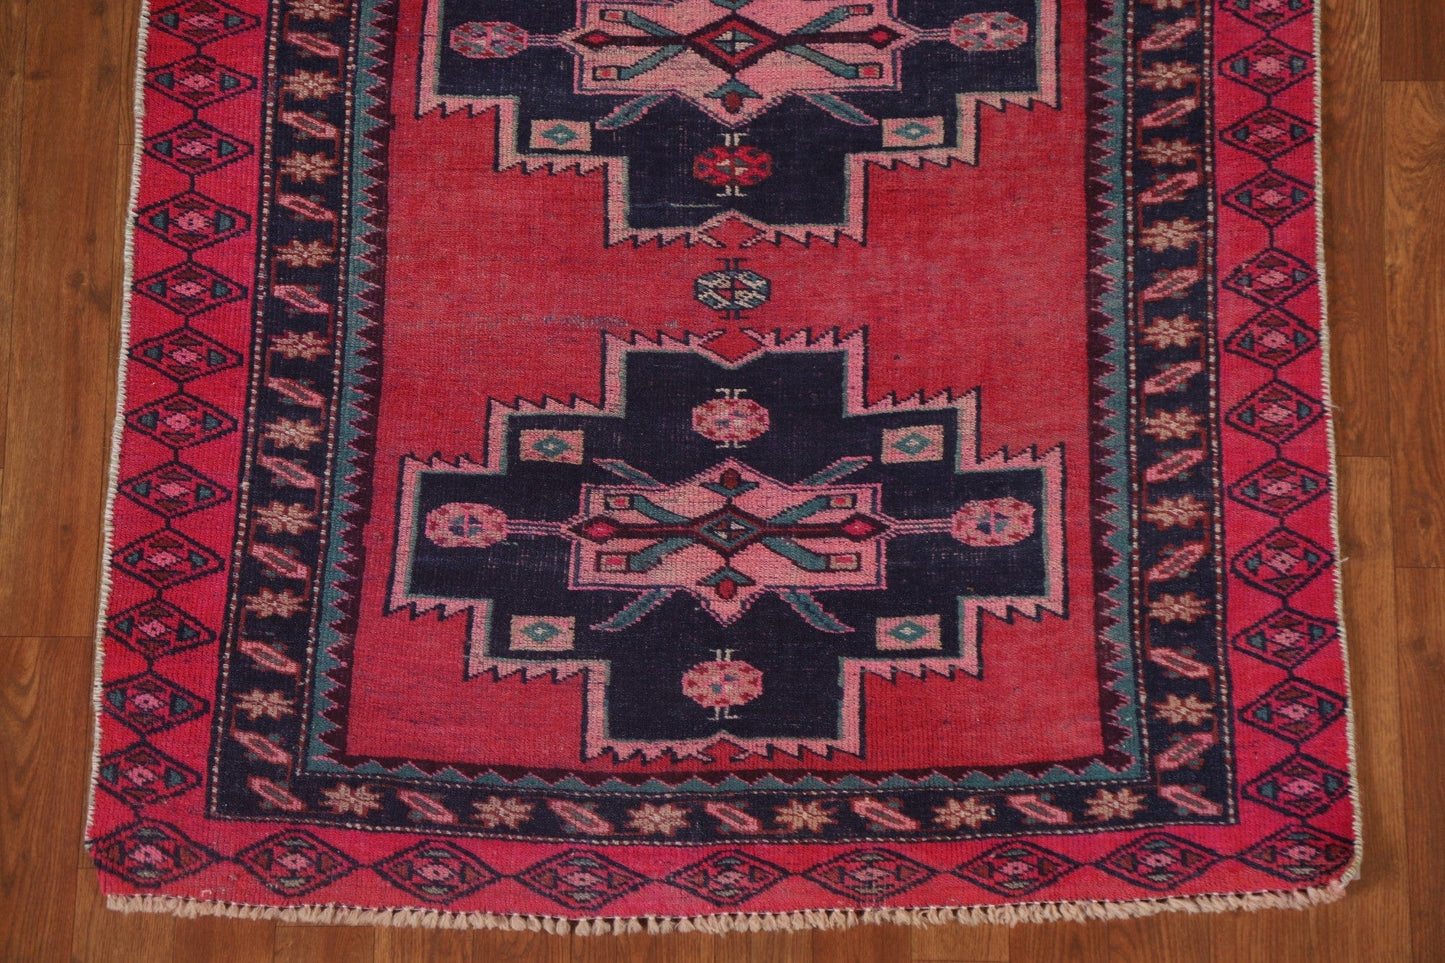 Geometric Wool Ardebil Persian Runner Rug 3x10